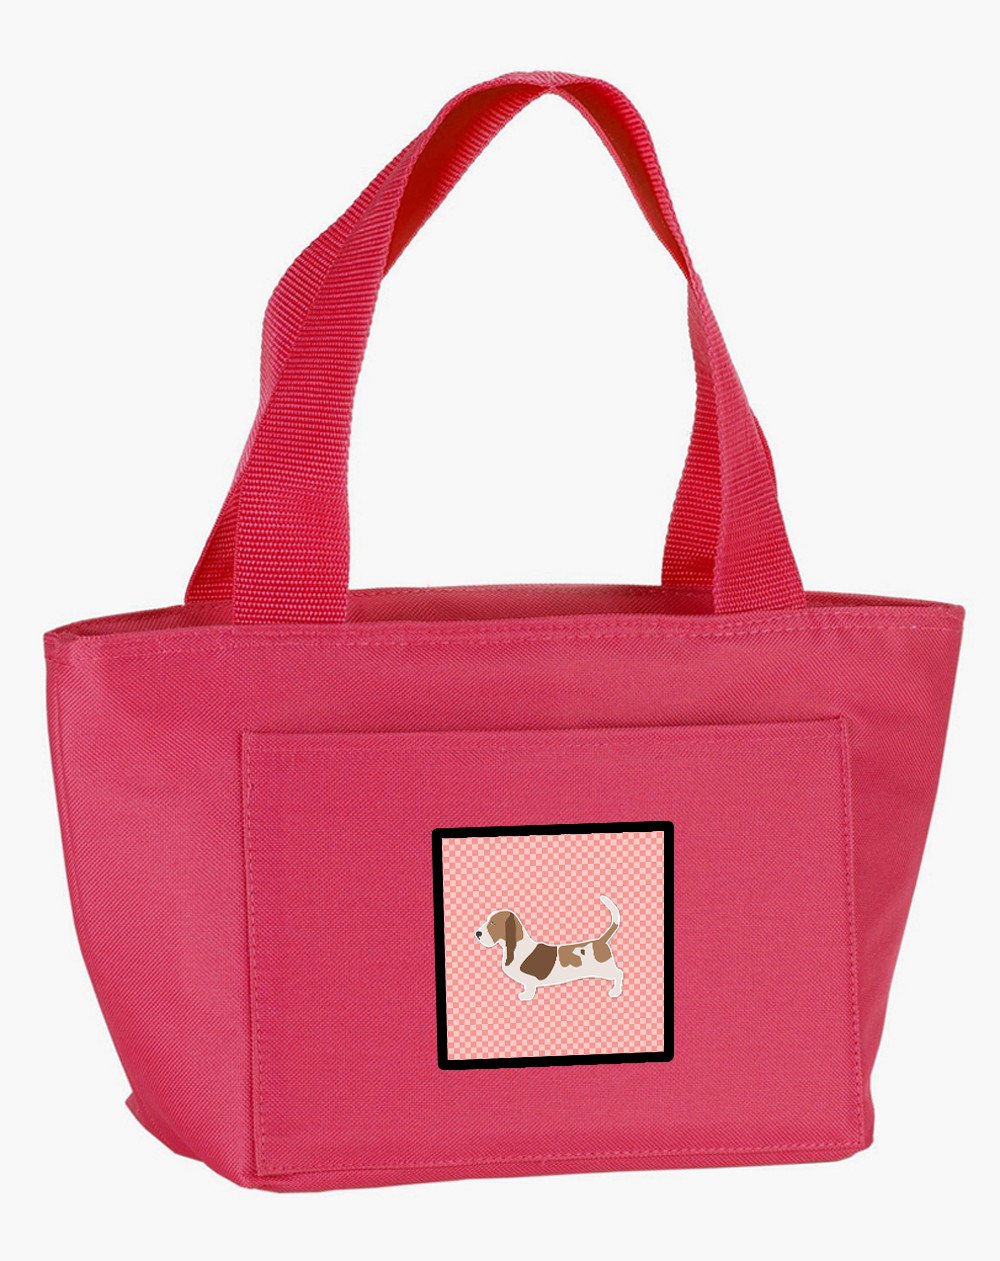 Basset Hound Checkerboard Pink Lunch Bag BB3602PK-8808 by Caroline's Treasures